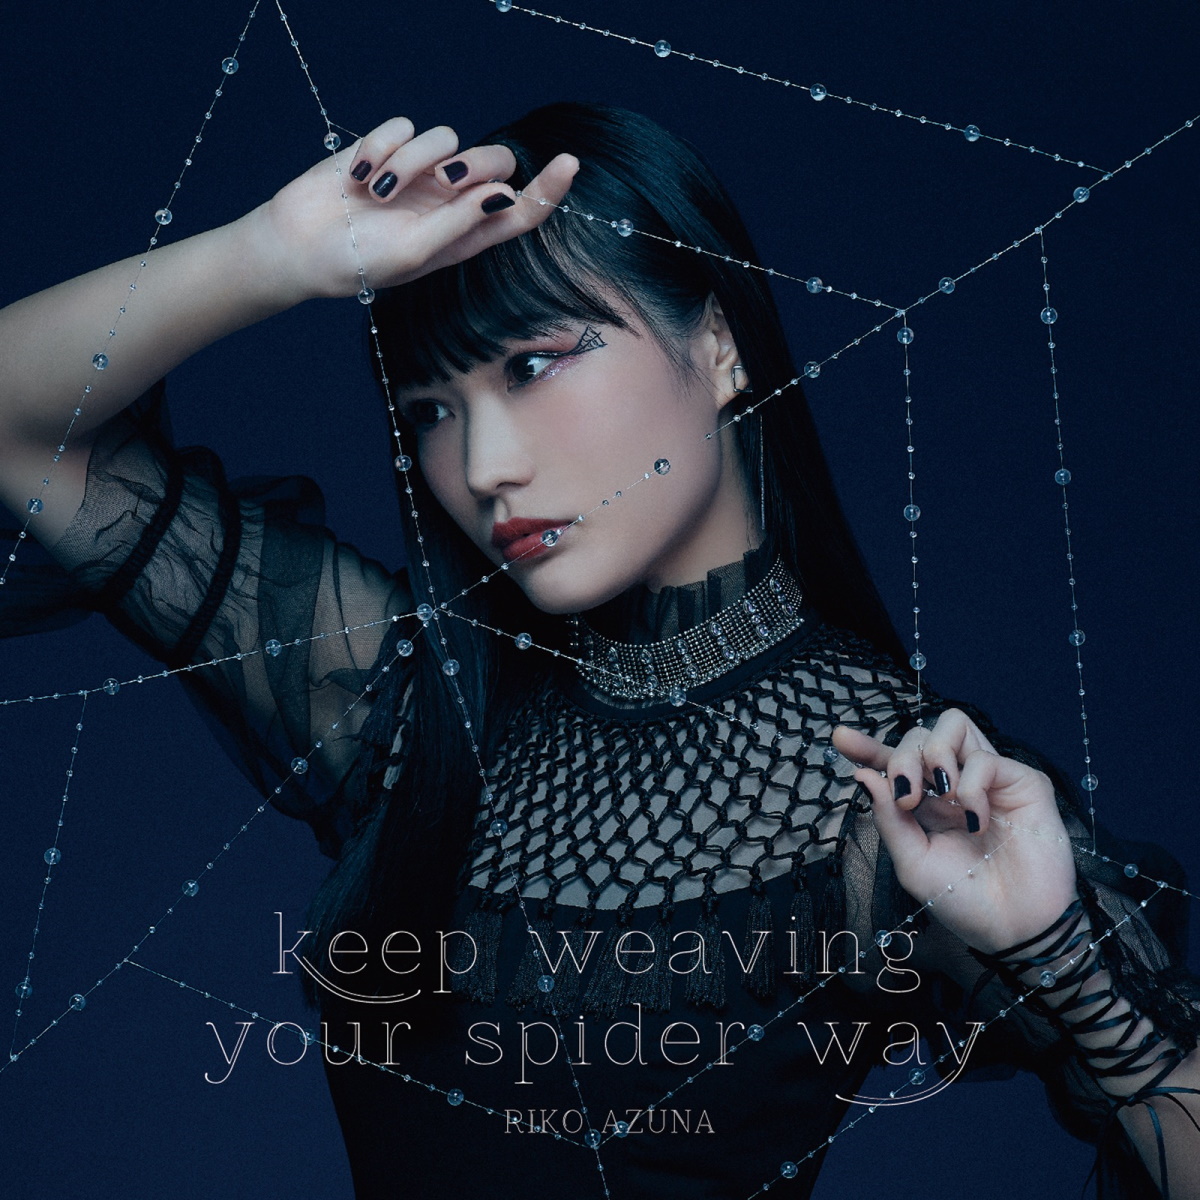 Cover art for『Riko Azuna - keep weaving your spider way』from the release『keep weaving your spider way